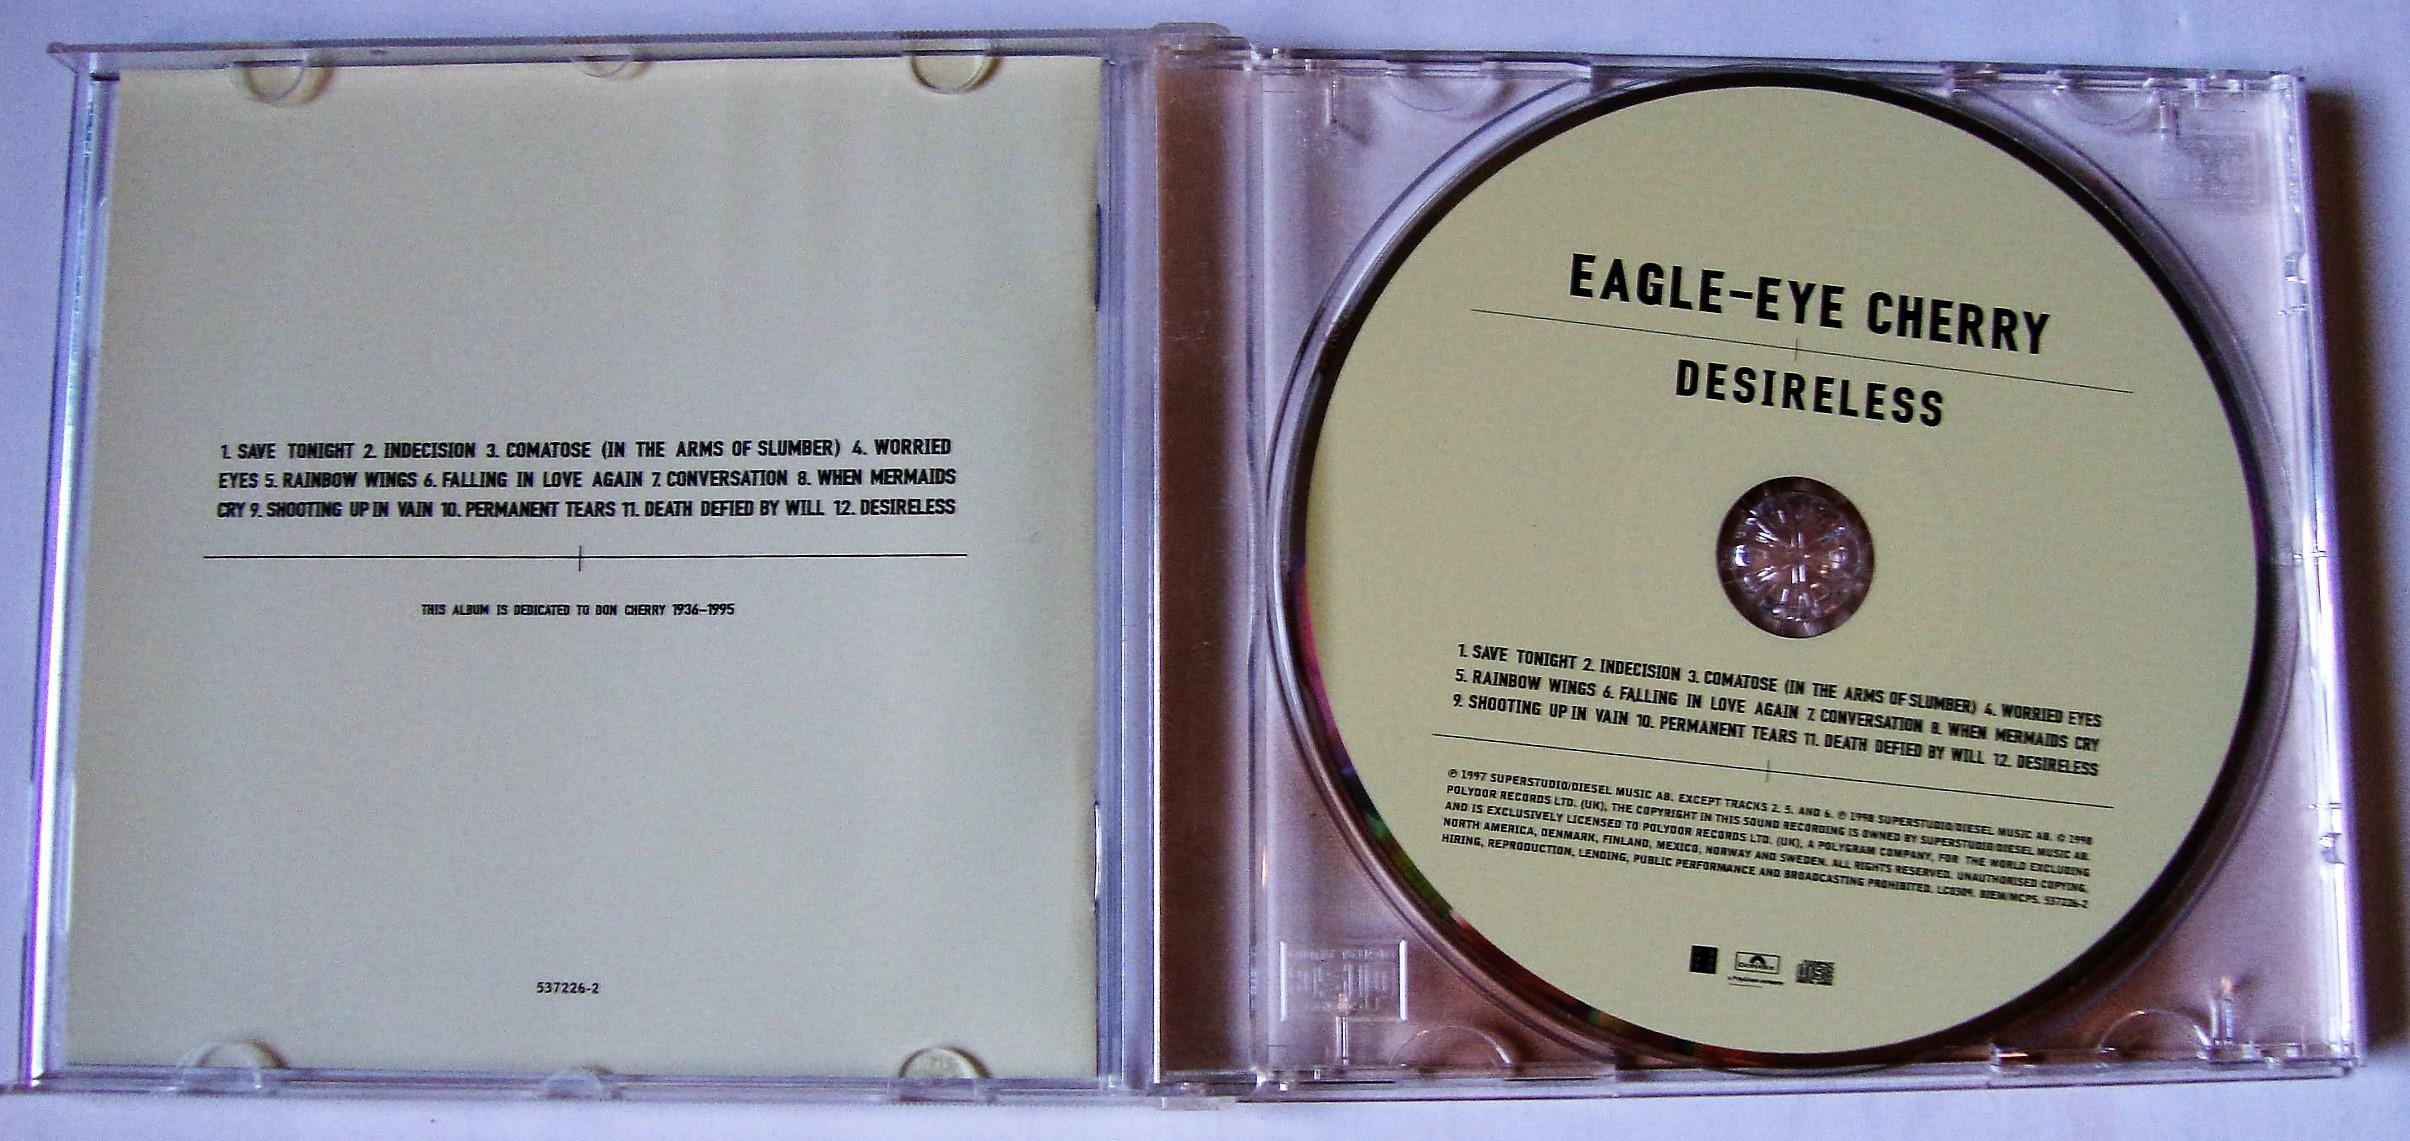 troc de troc cd album eagle-eye cherry " désireless" image 1